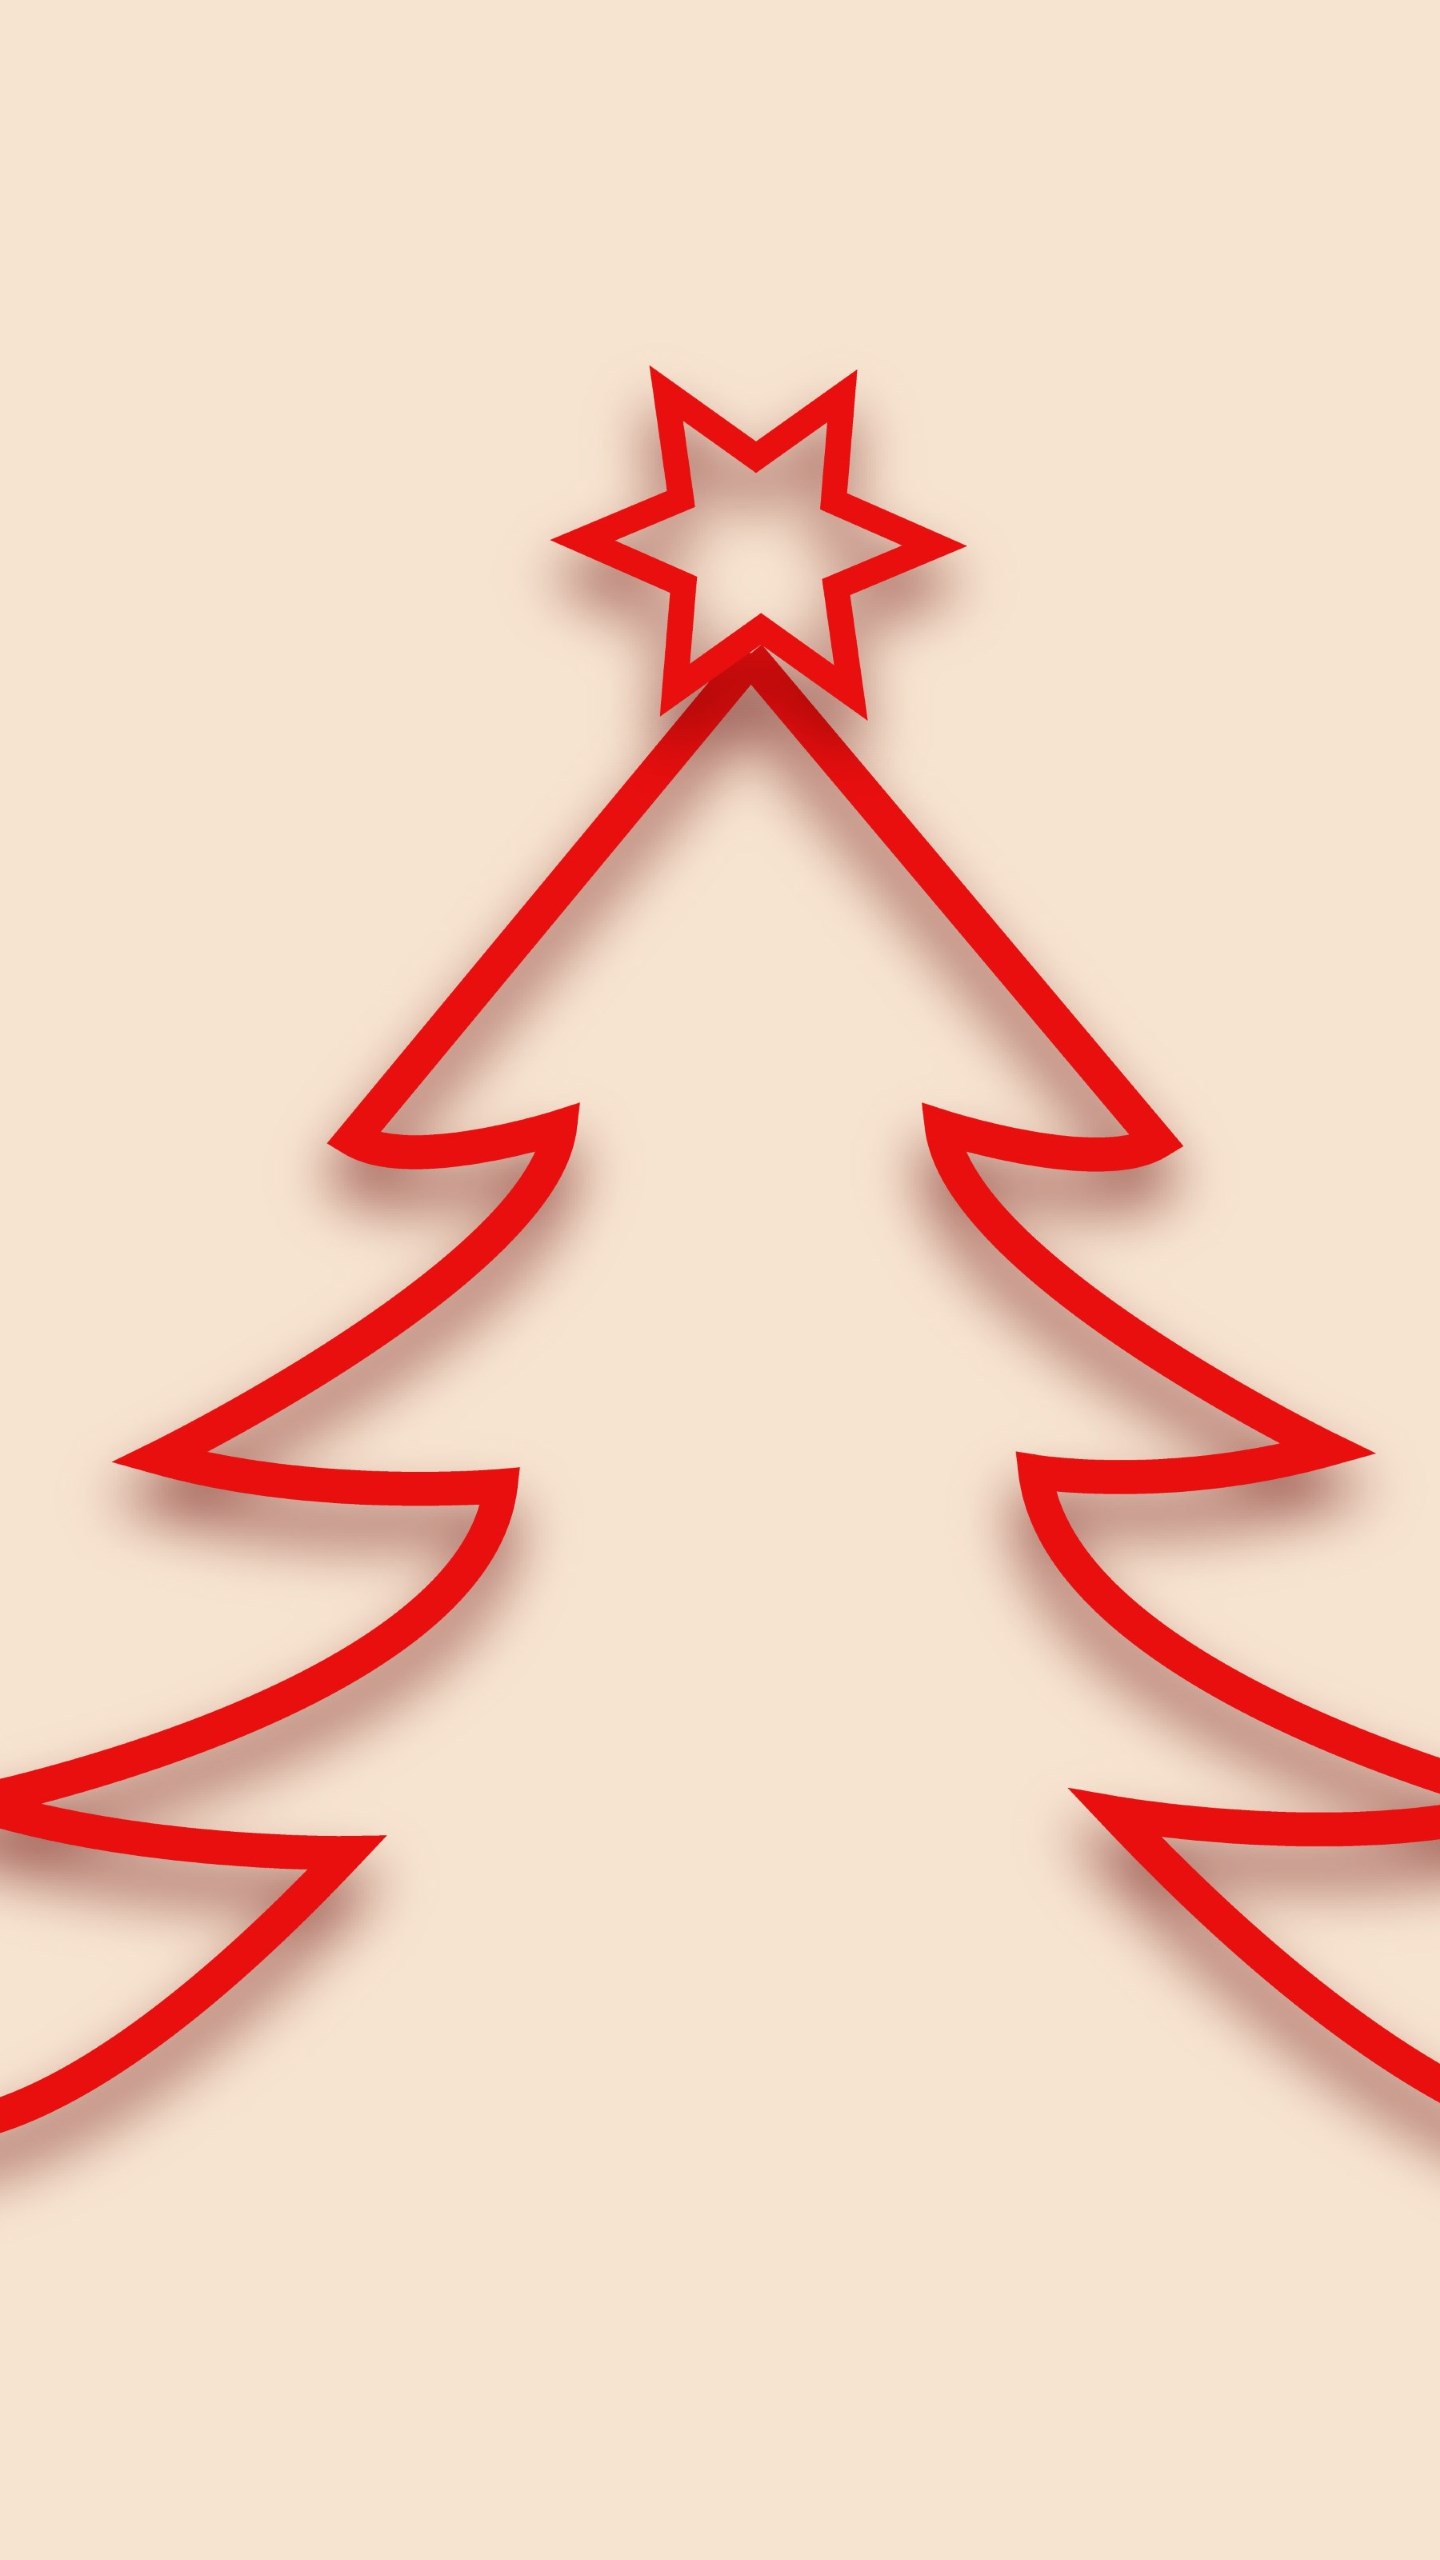 Red minimalistic Christmas tree design wallpaper 1440x2560